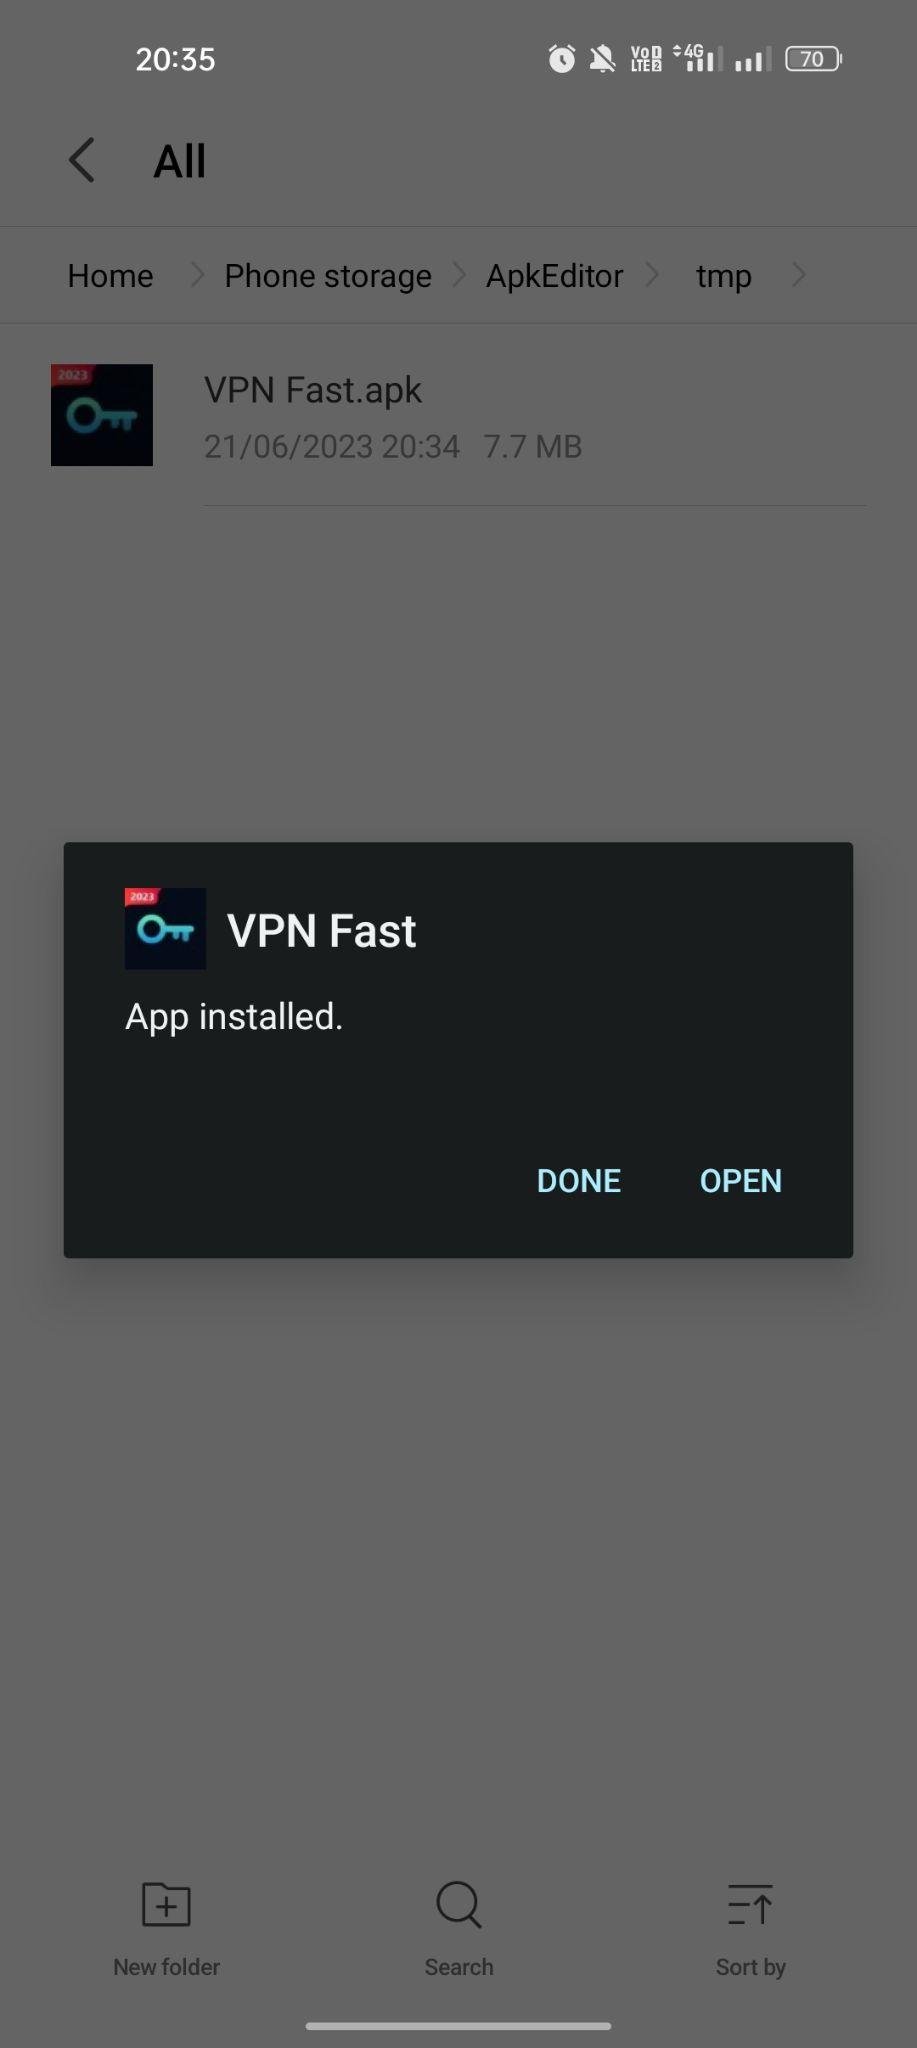 VPN Fast apk installed